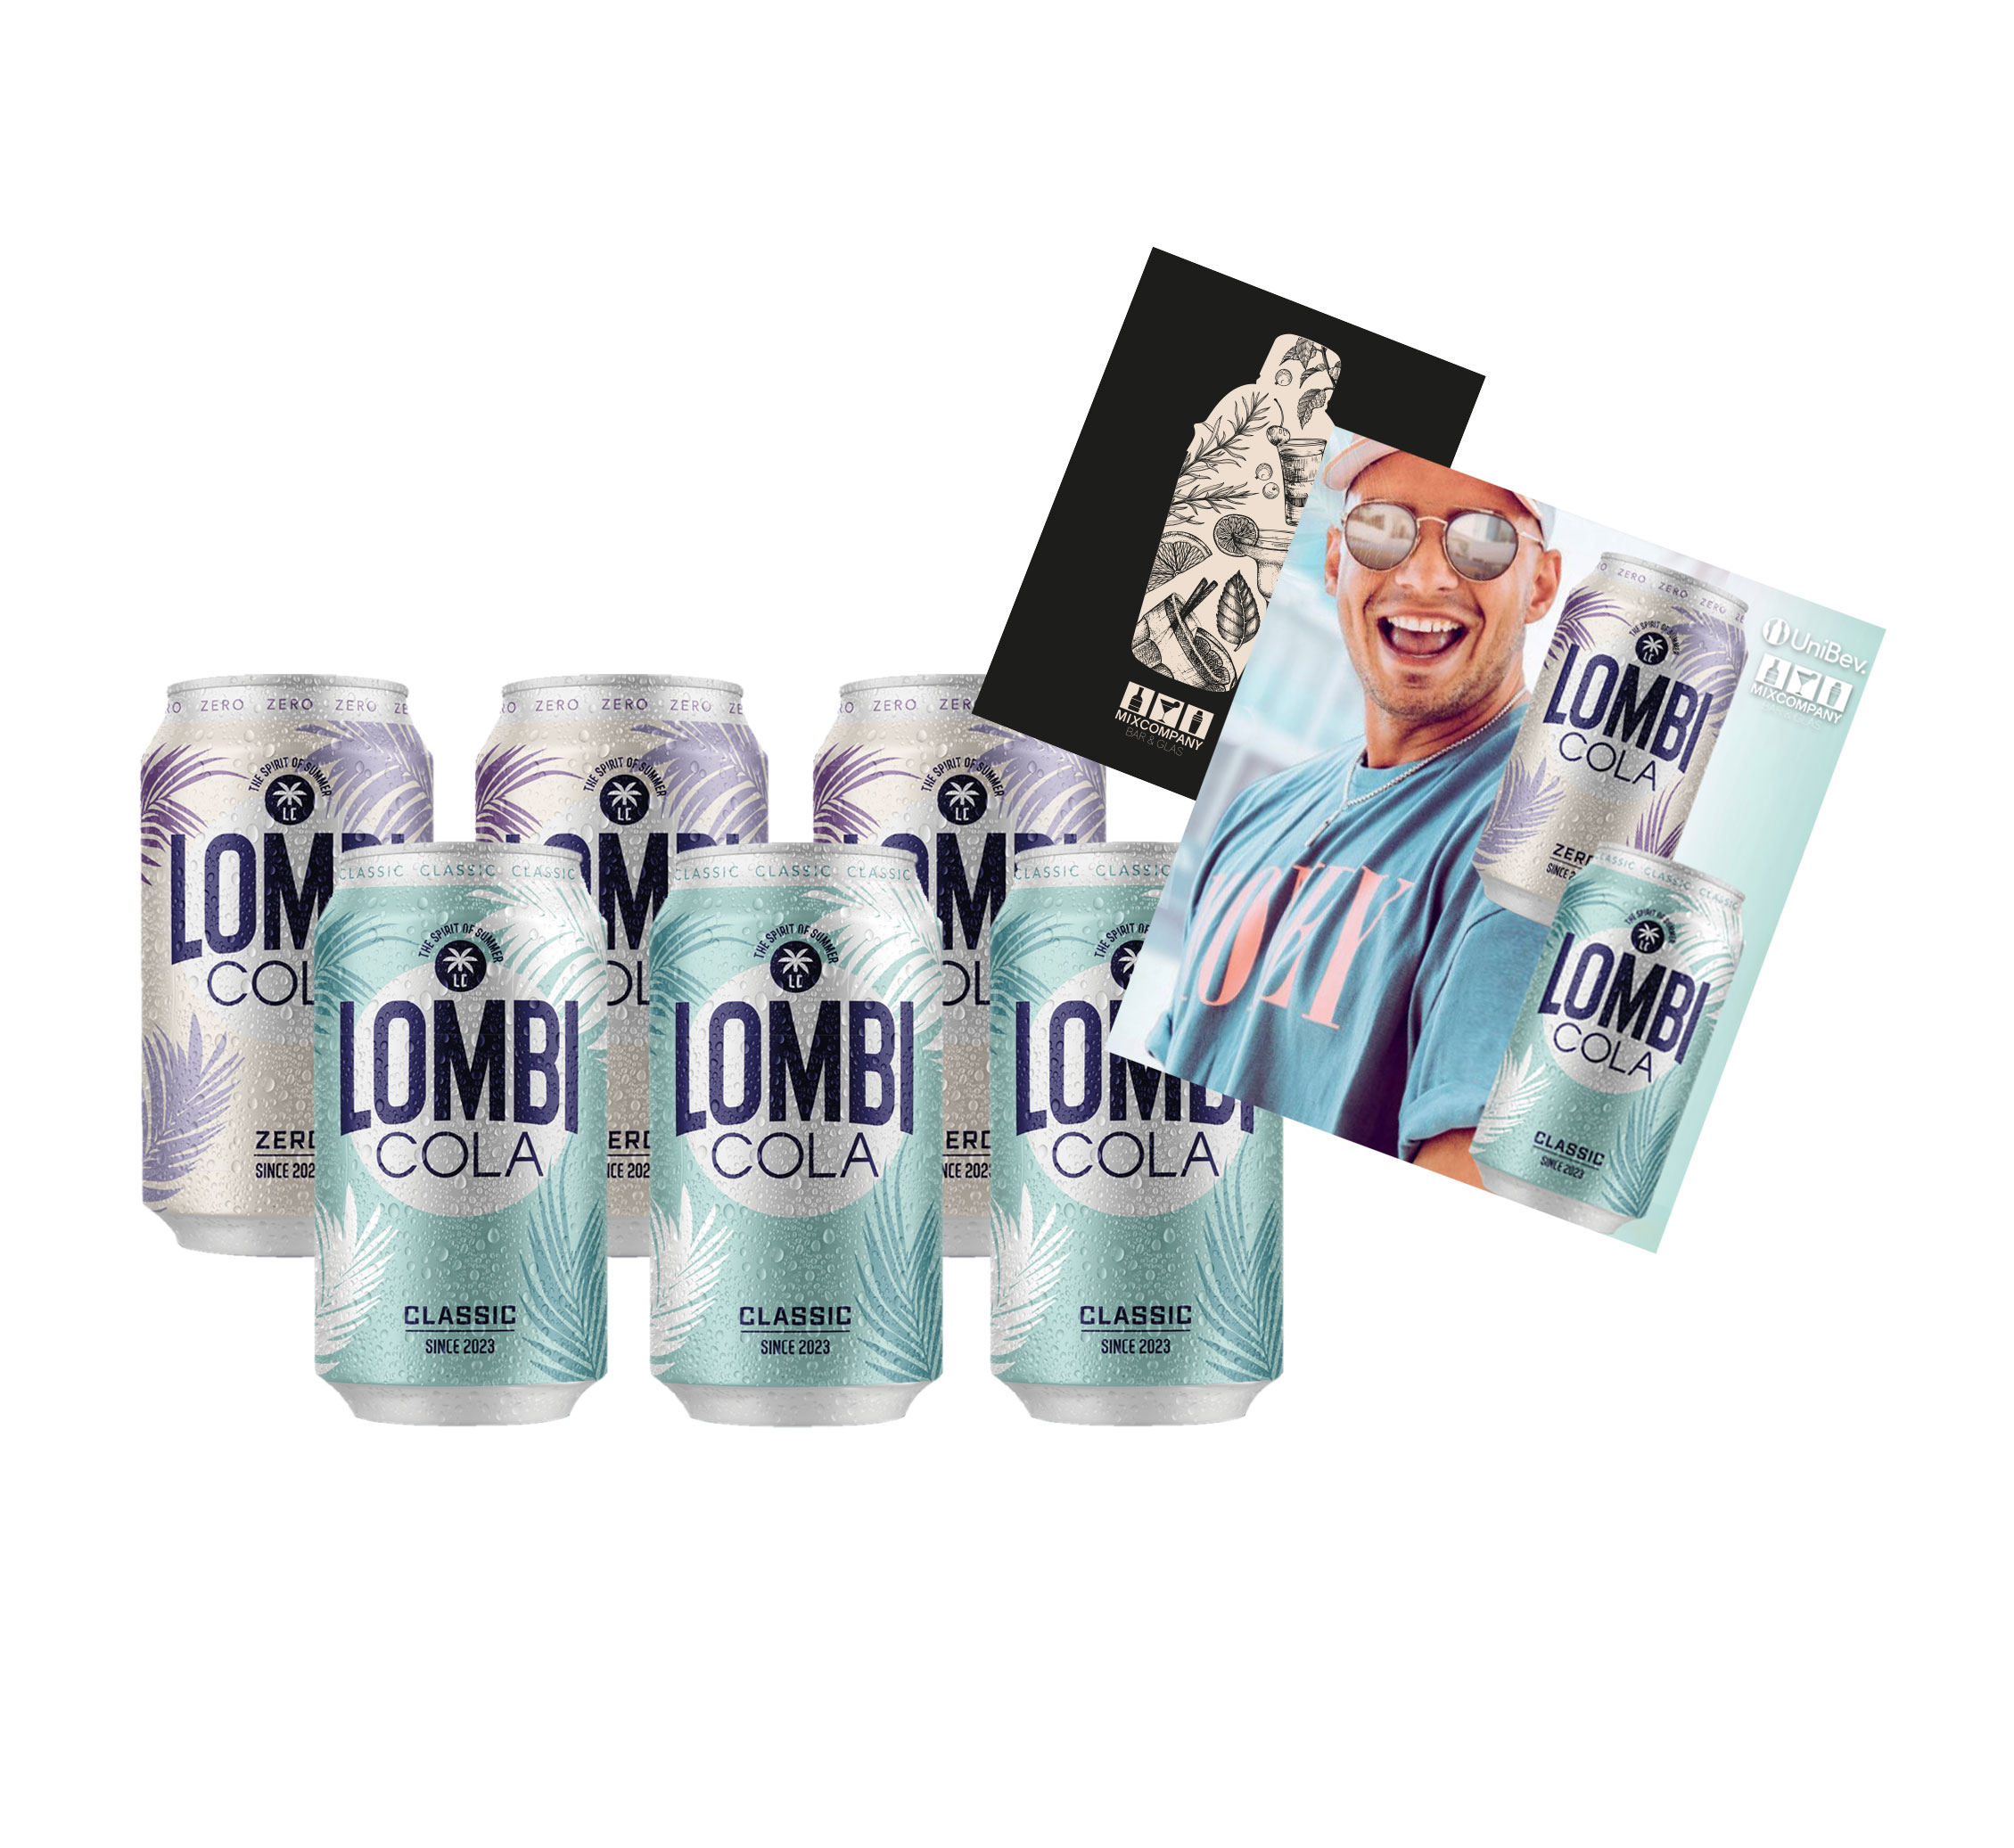 Lombi Cola - Sänger Pietro Lombardi 6er Mix Set - 3x Lombi Cola + 3x Lombi Cola ZERO je 0,33L mit Lombi Postkarte inkl. Pfand EINWEG